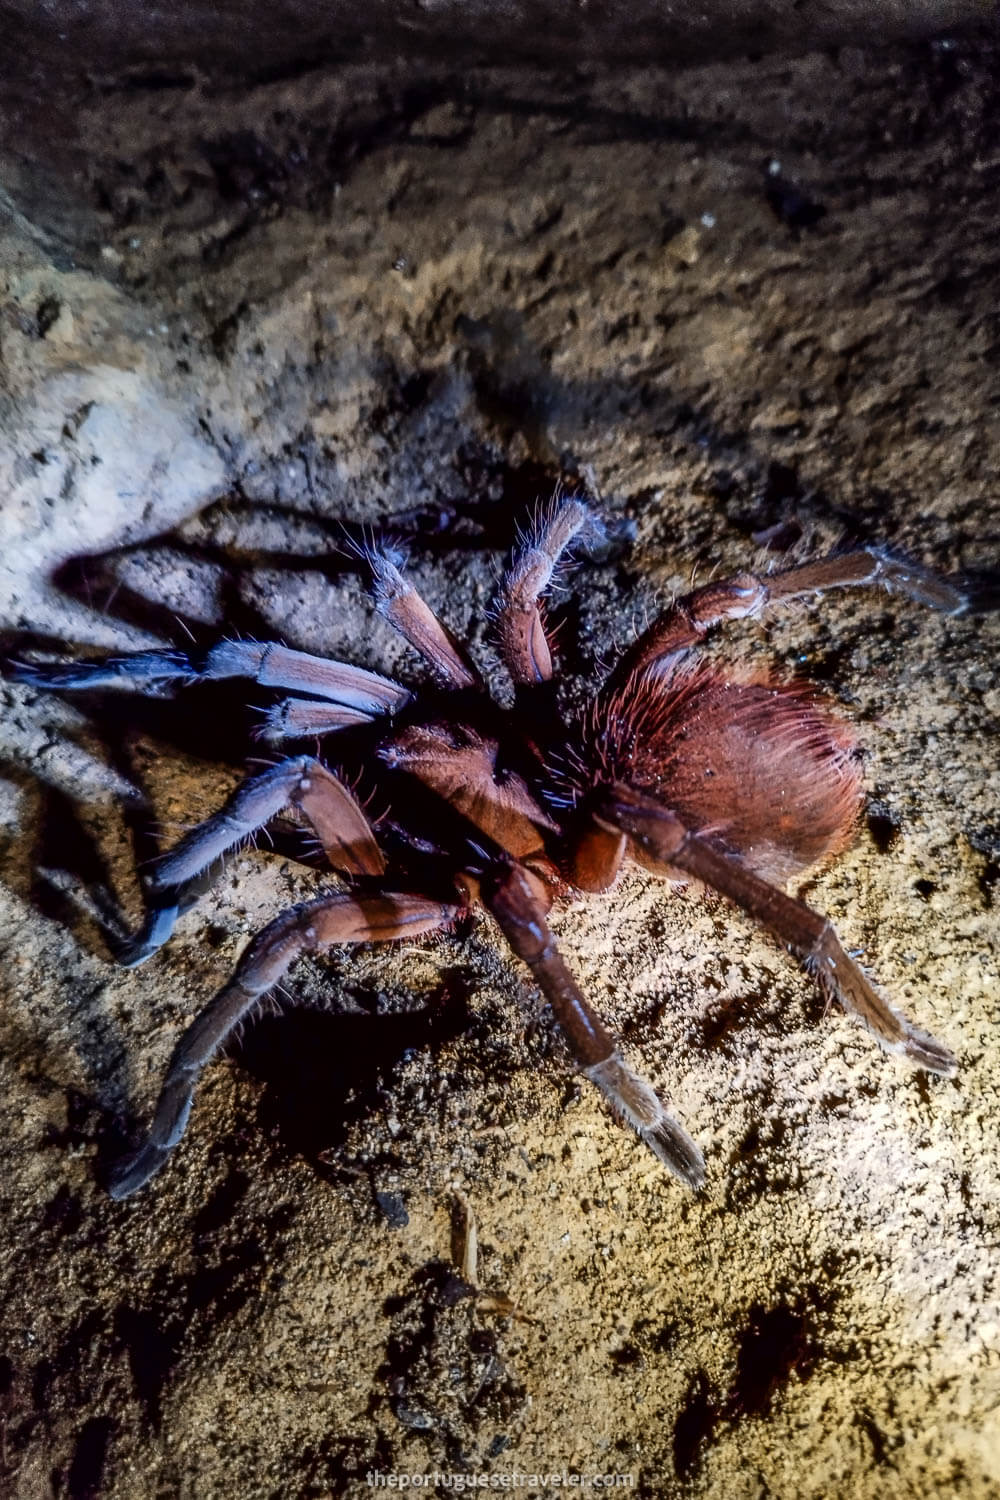 A cute tarantula inside the cave